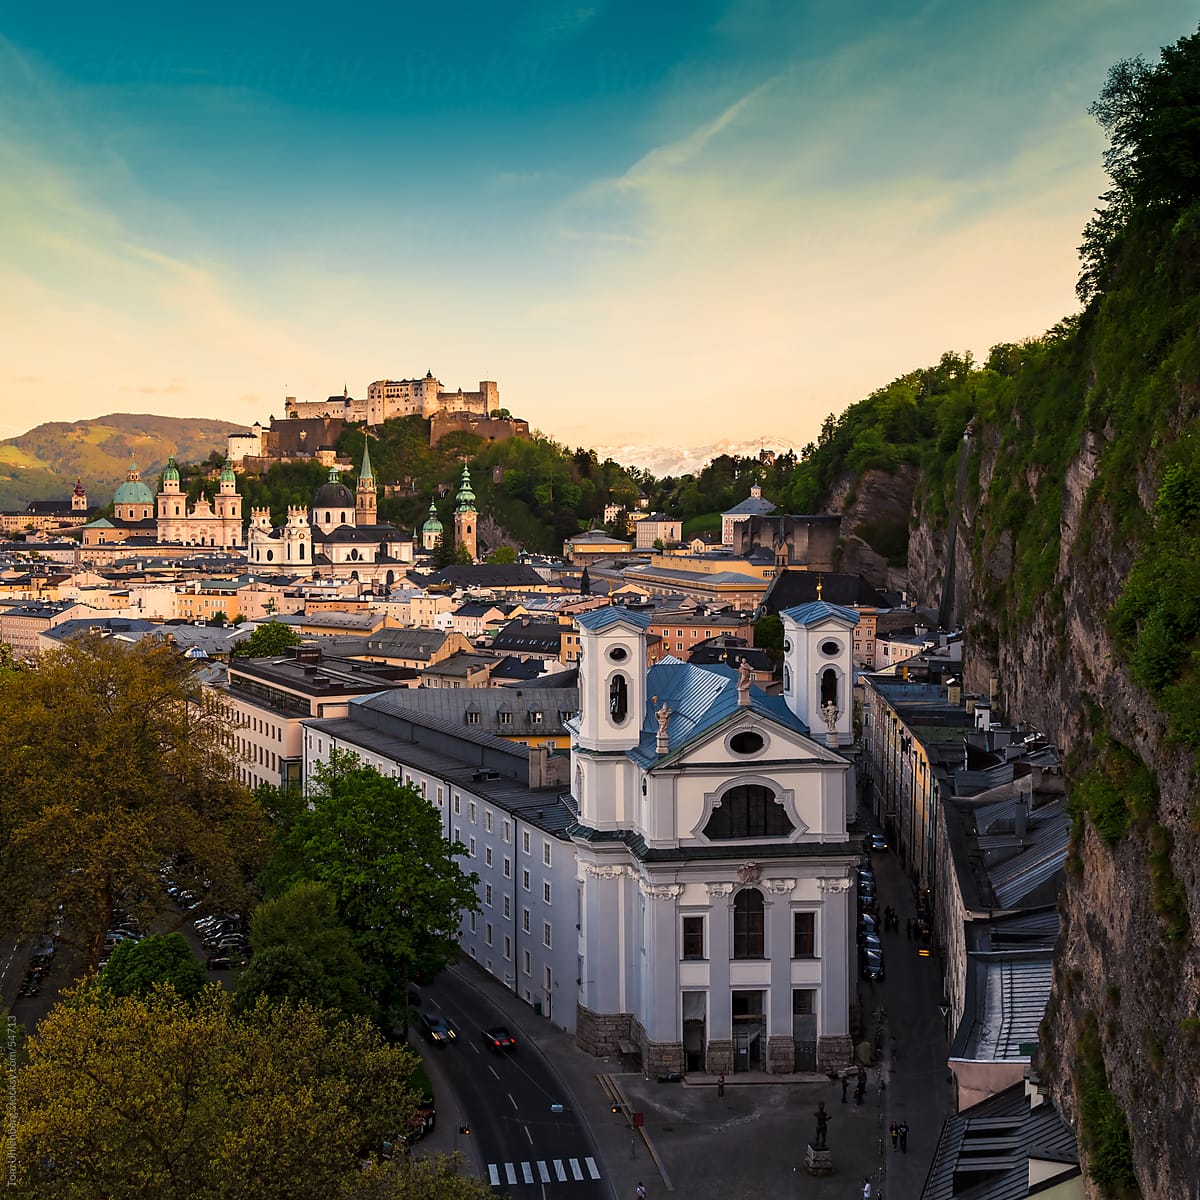 The Austrian City Salzburg at Dusk